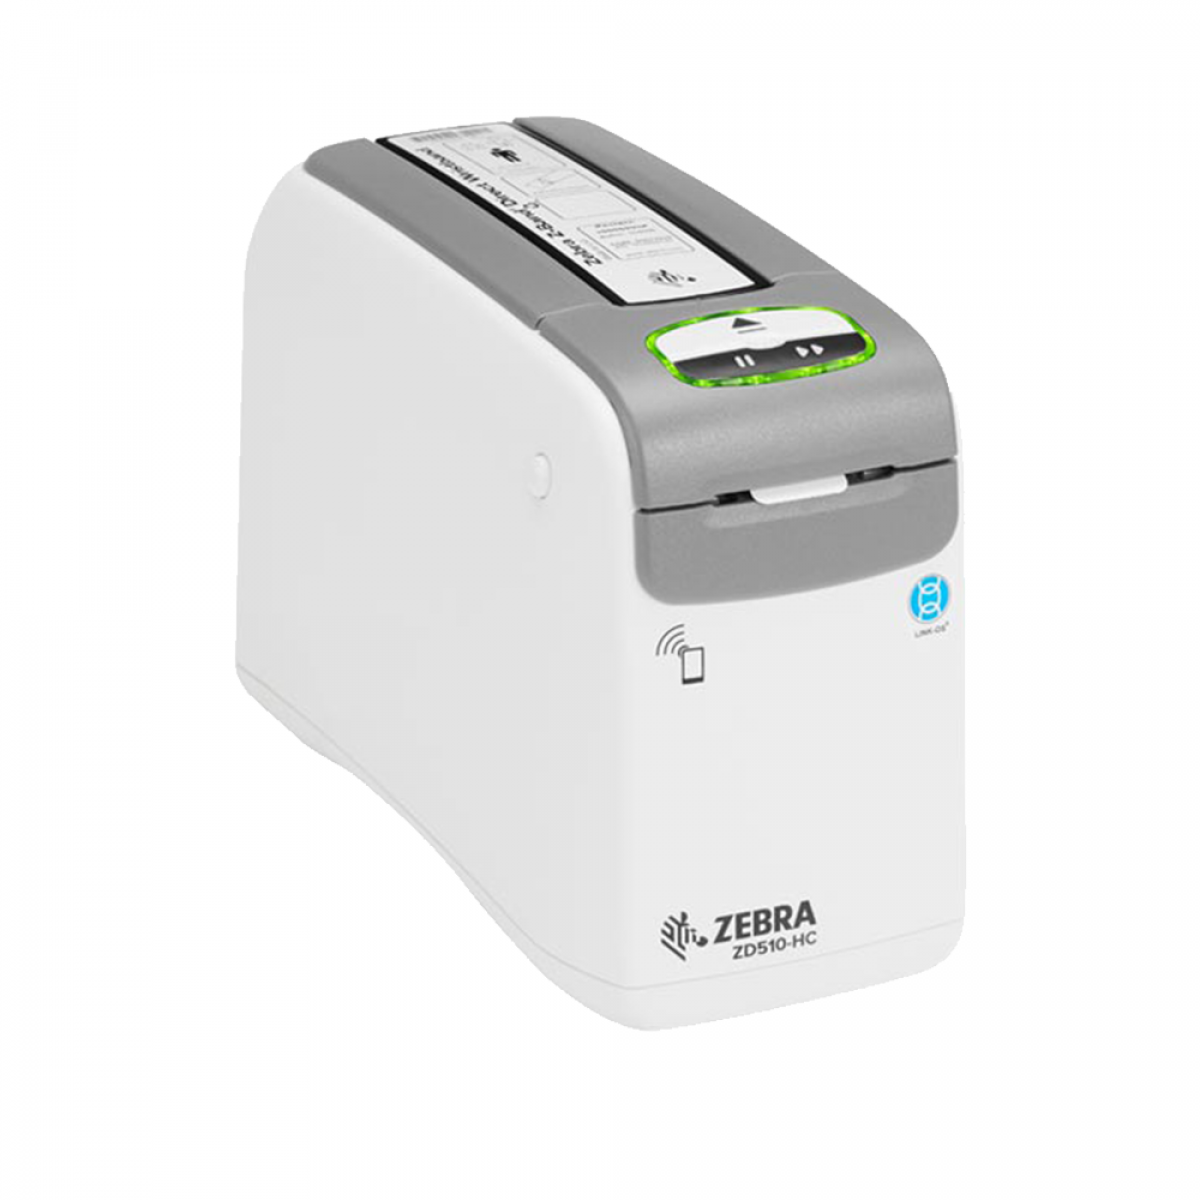 Zebra ZD510-HC healthcare Z-band wristband printer